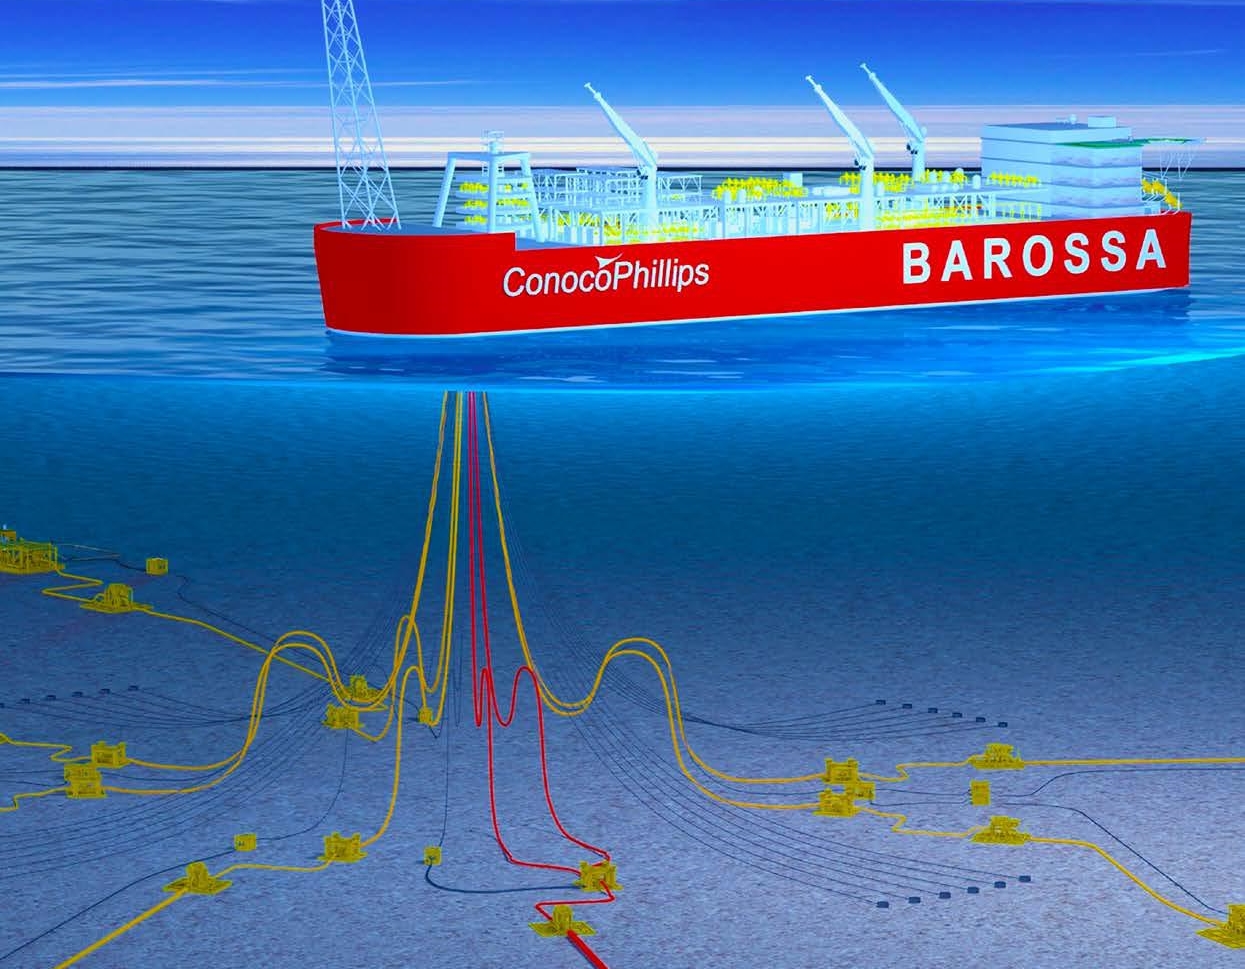 ConocoPhillips picks Intecsea for Barossa subsea FEED